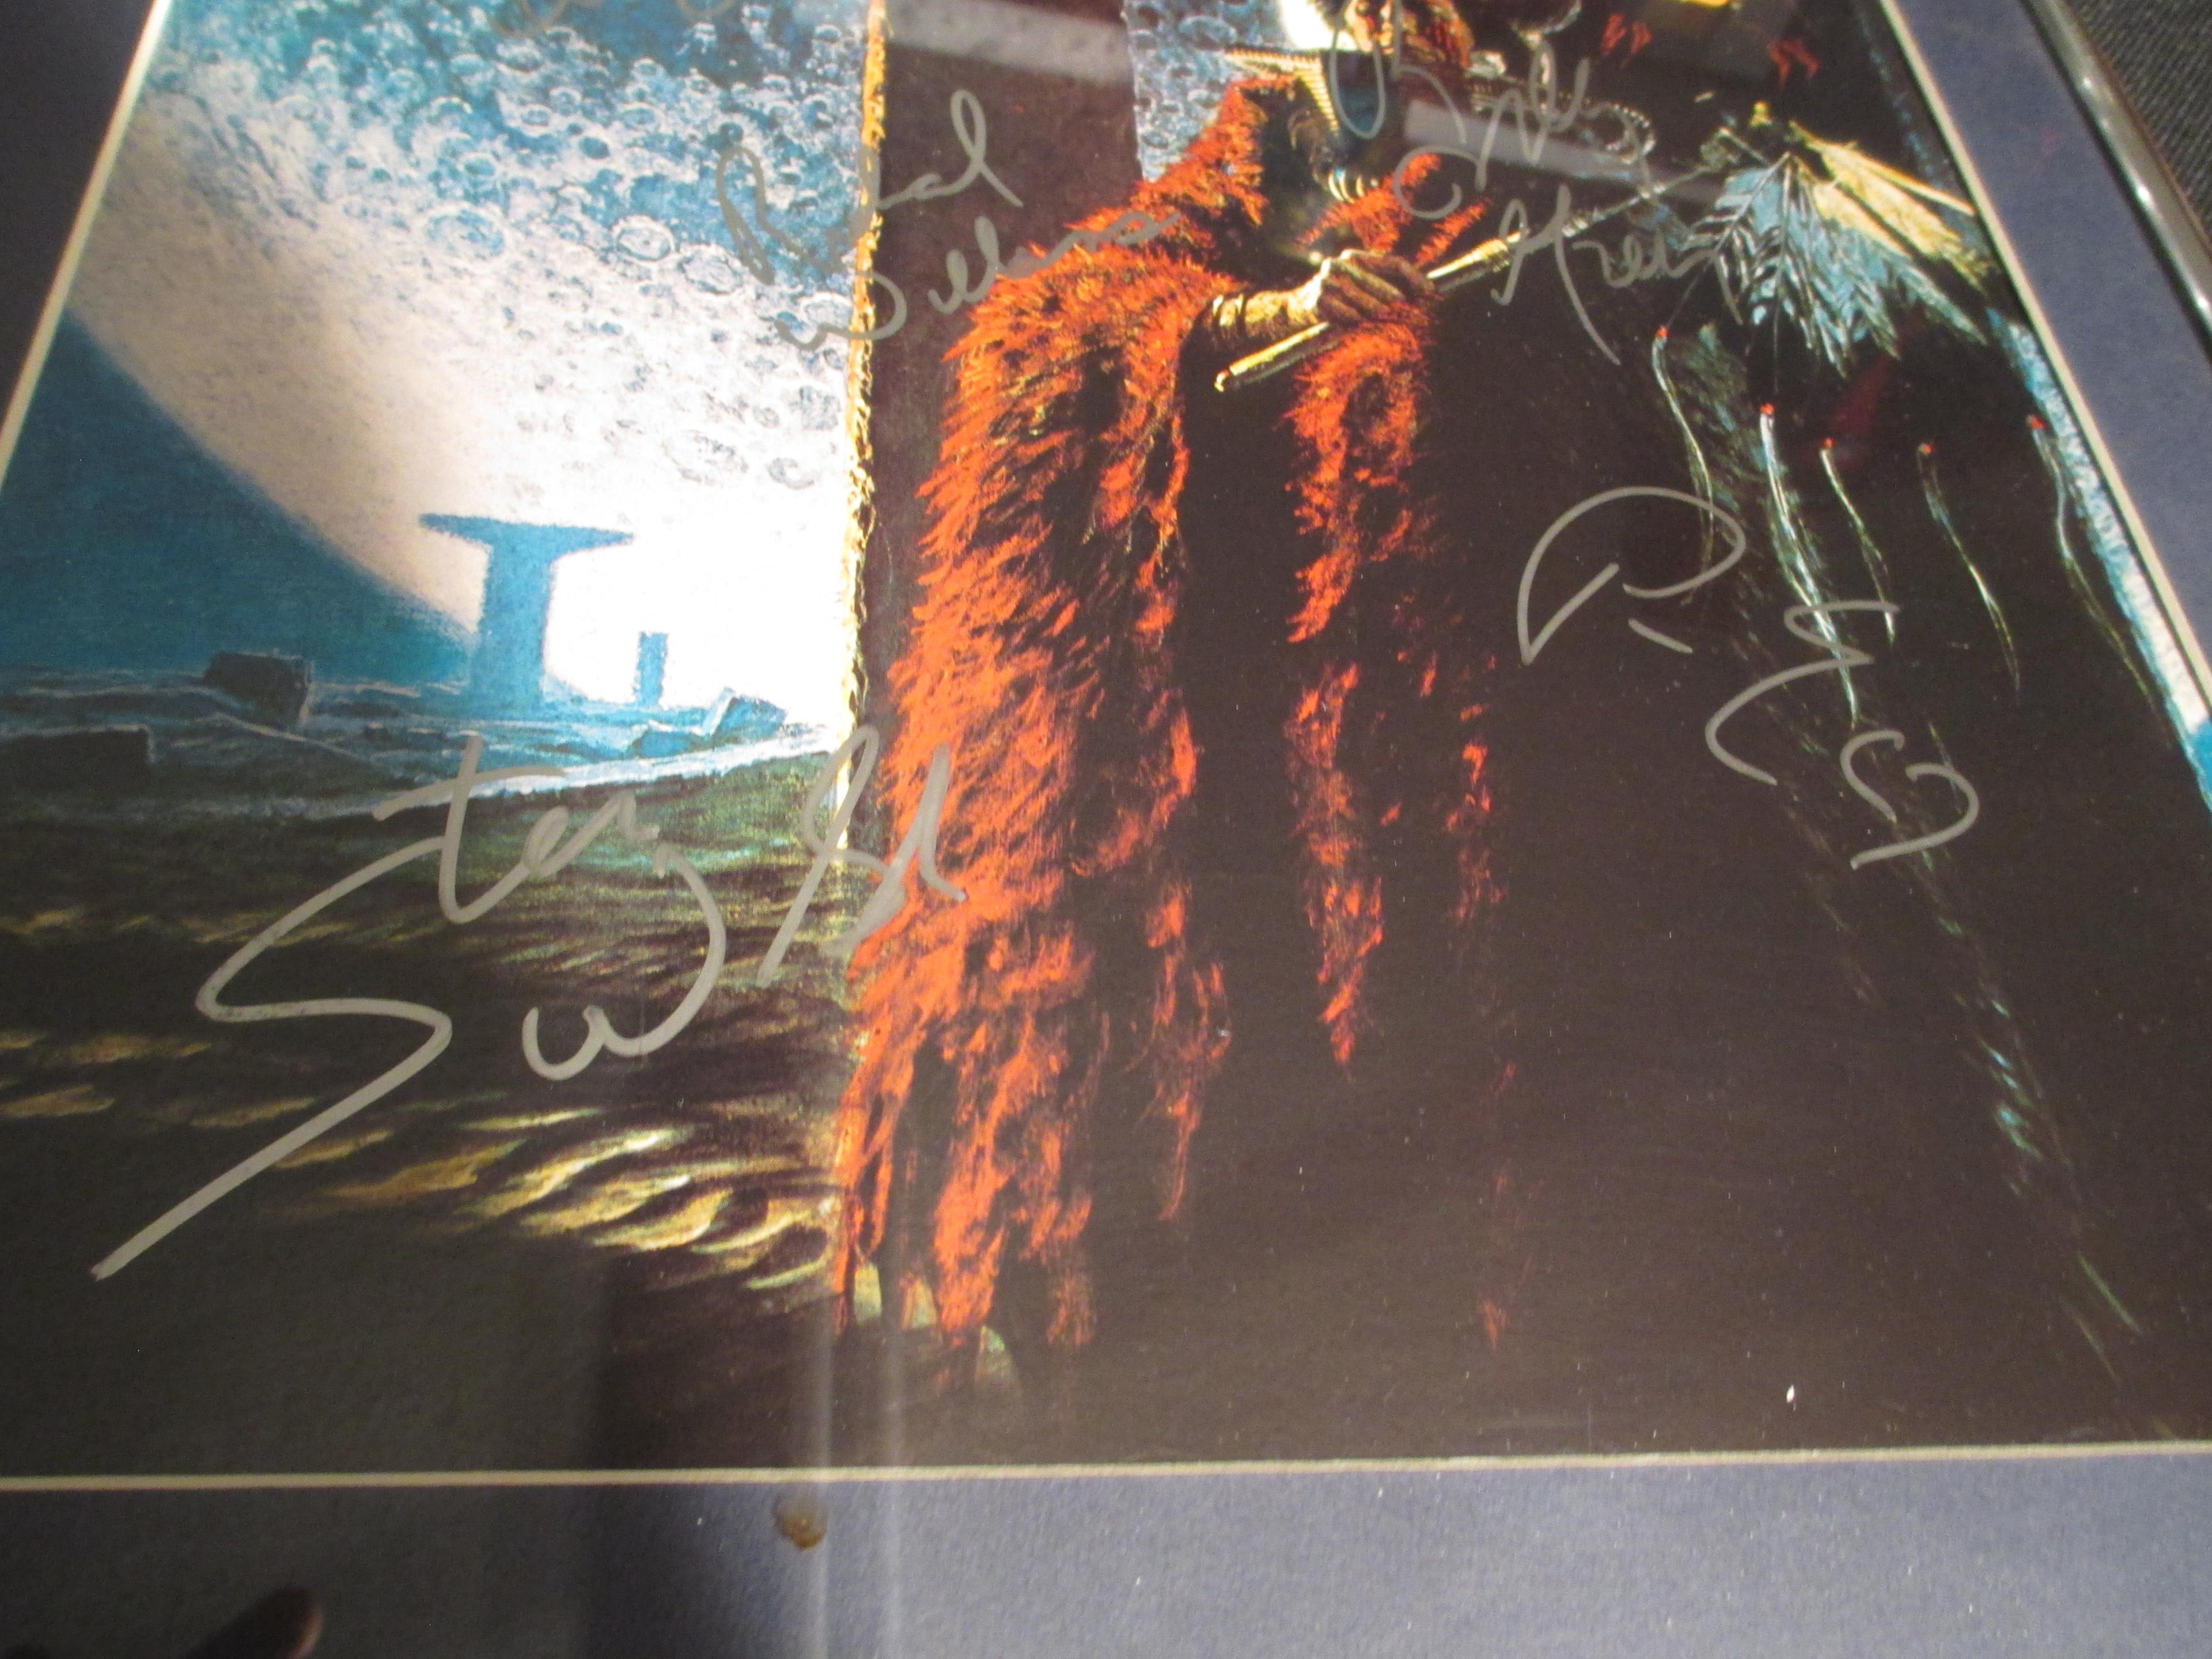 Kansas Autographed 'Monolith' Framed Album Cover